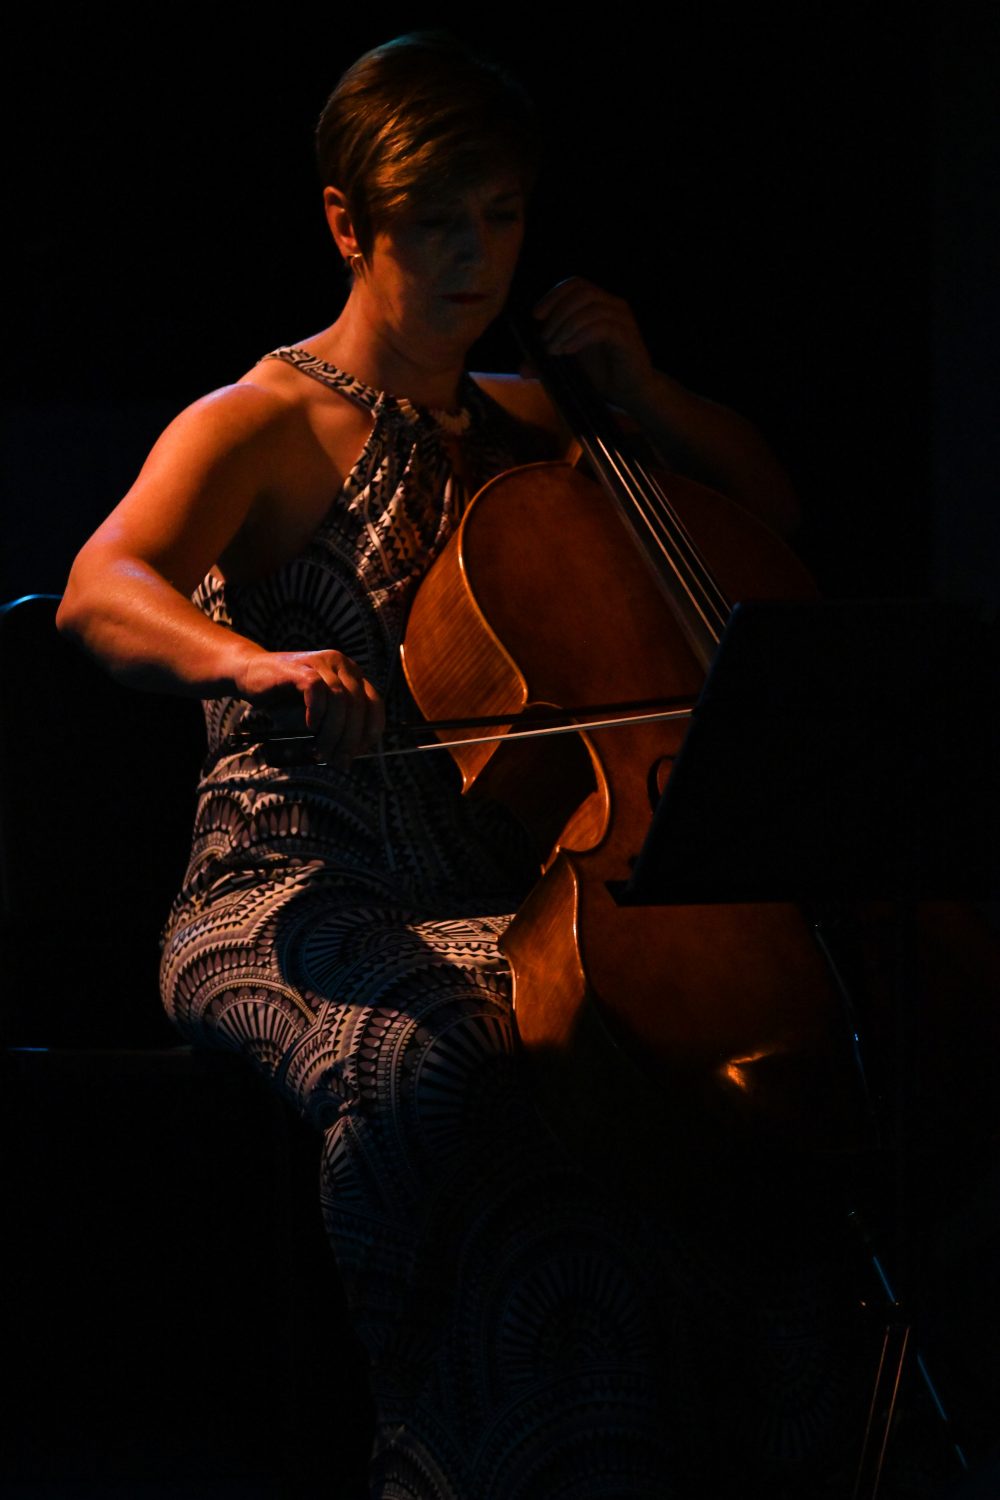 Kate Dillingham at world premiere performance of mem mer mère – photo by Carl Deutsch